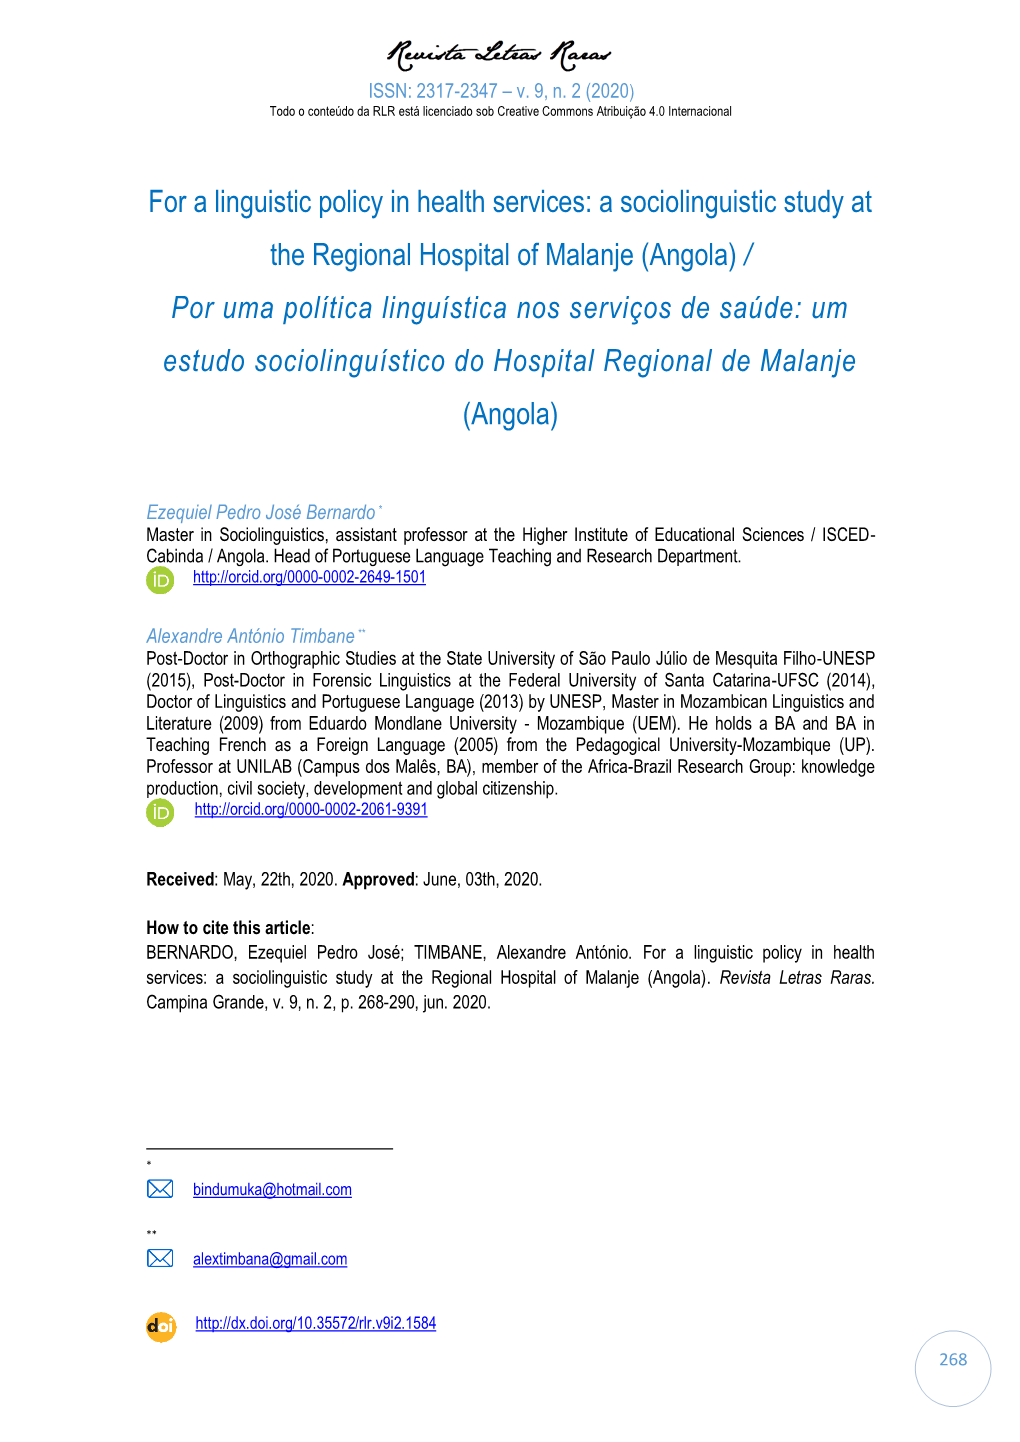 A Sociolinguistic Study at the Regional Hospital of Malanje (Angola)